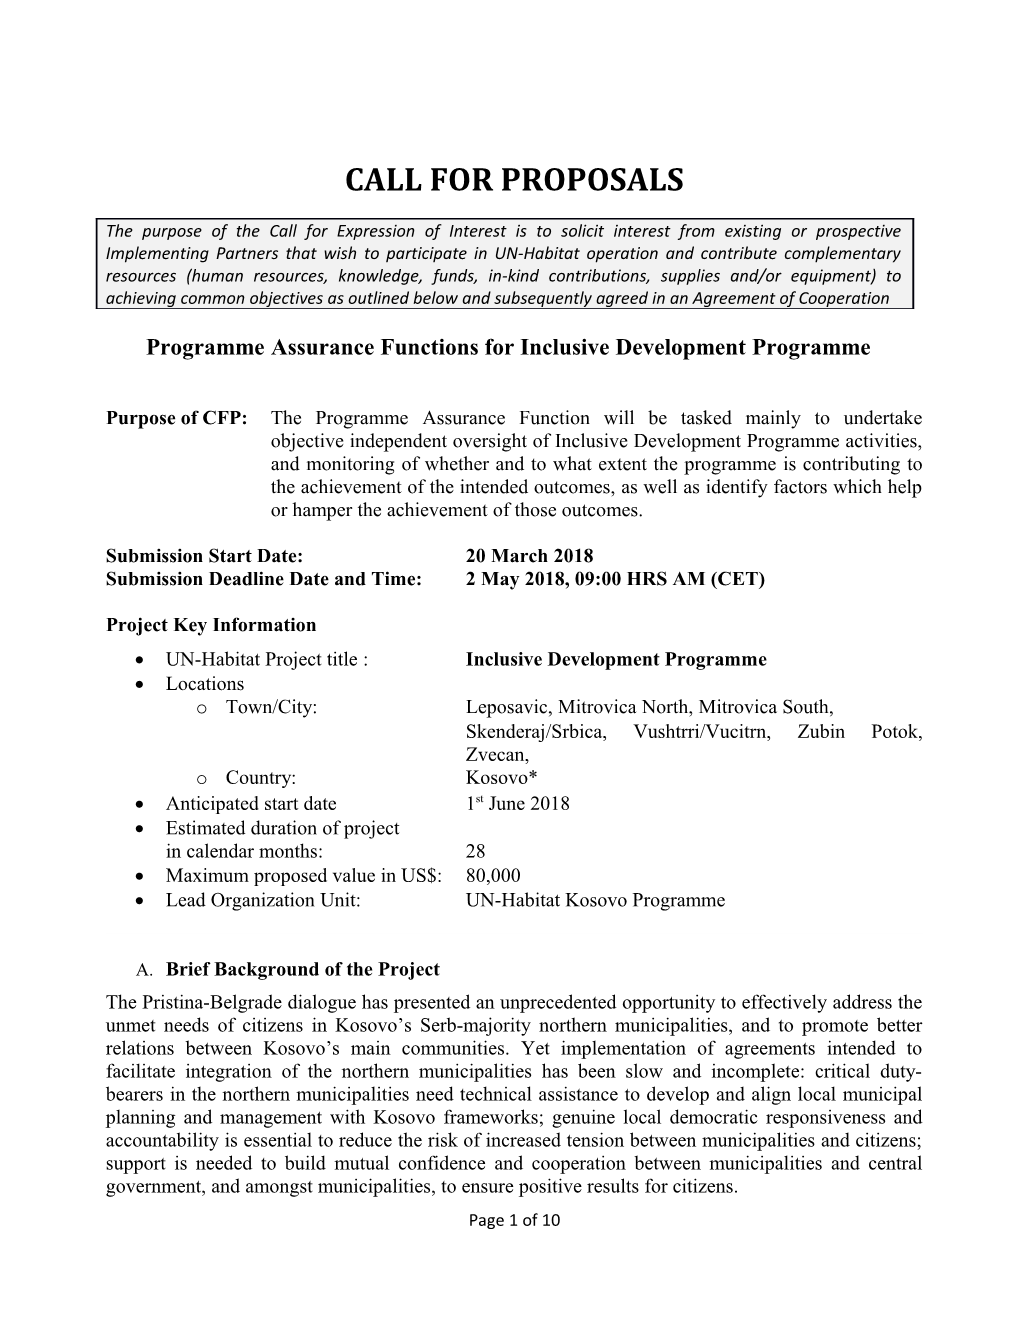 Programme Assurancefunctions for Inclusive Development Programme